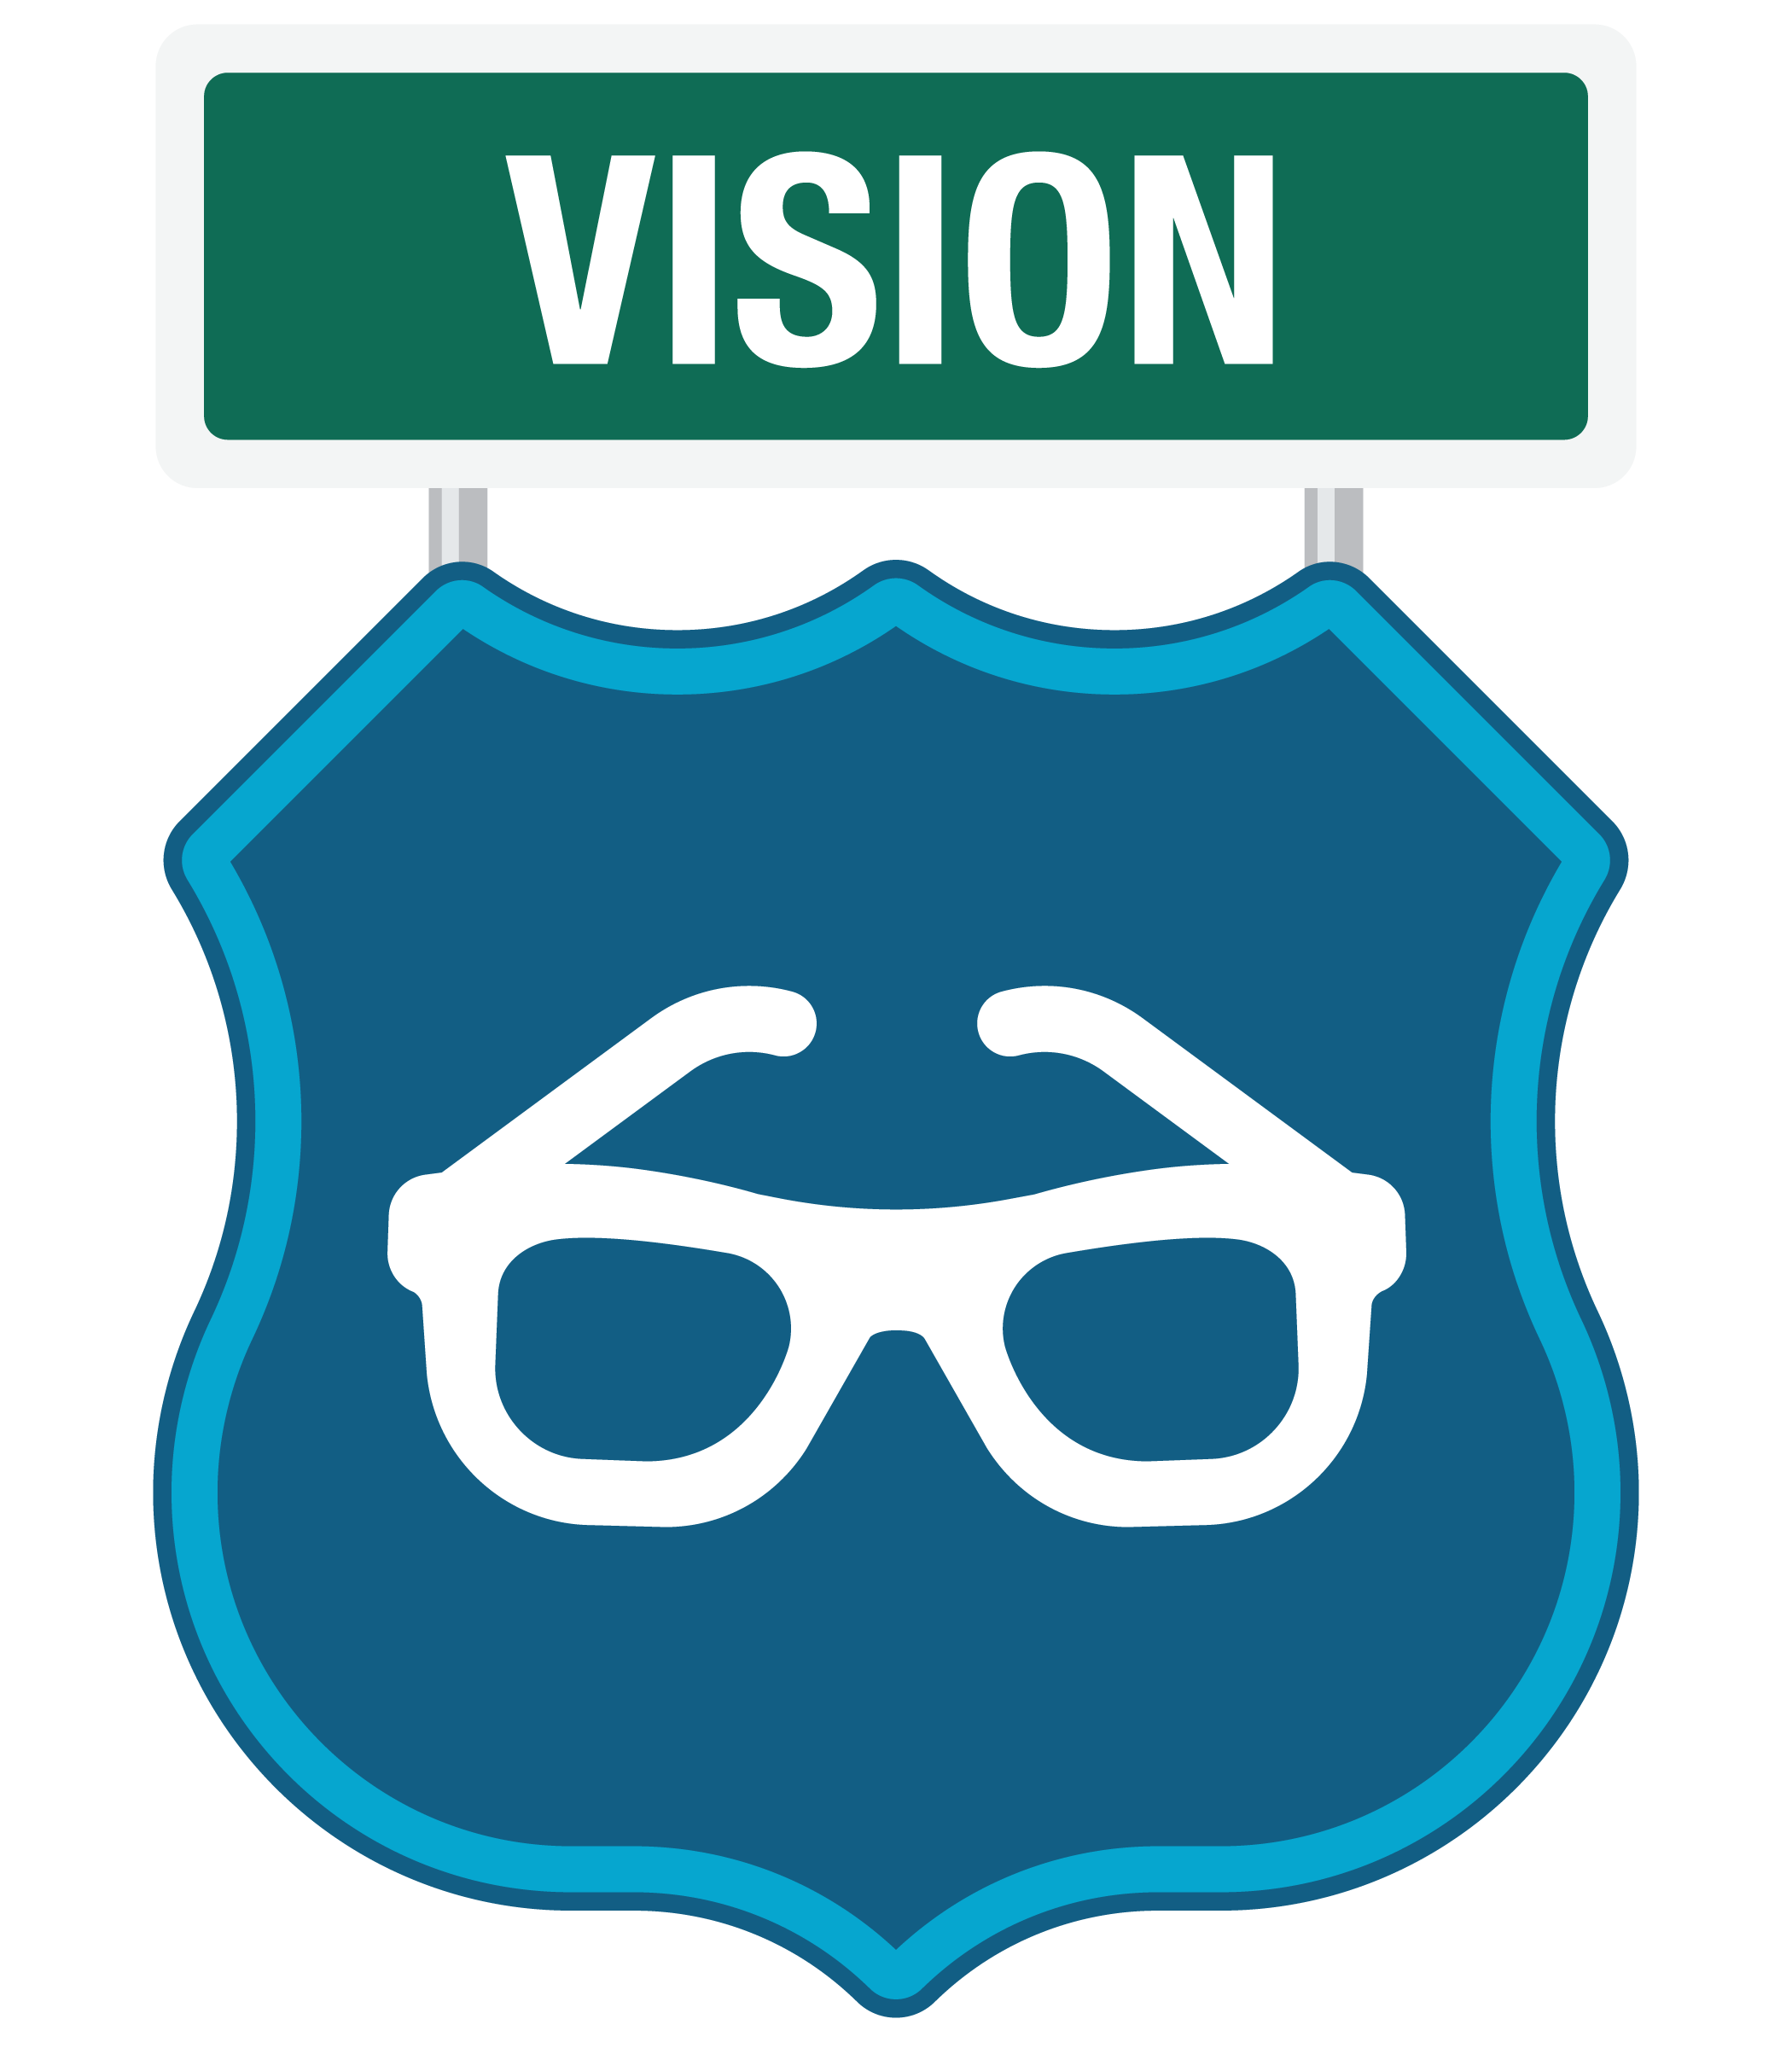 Click for vision plan details